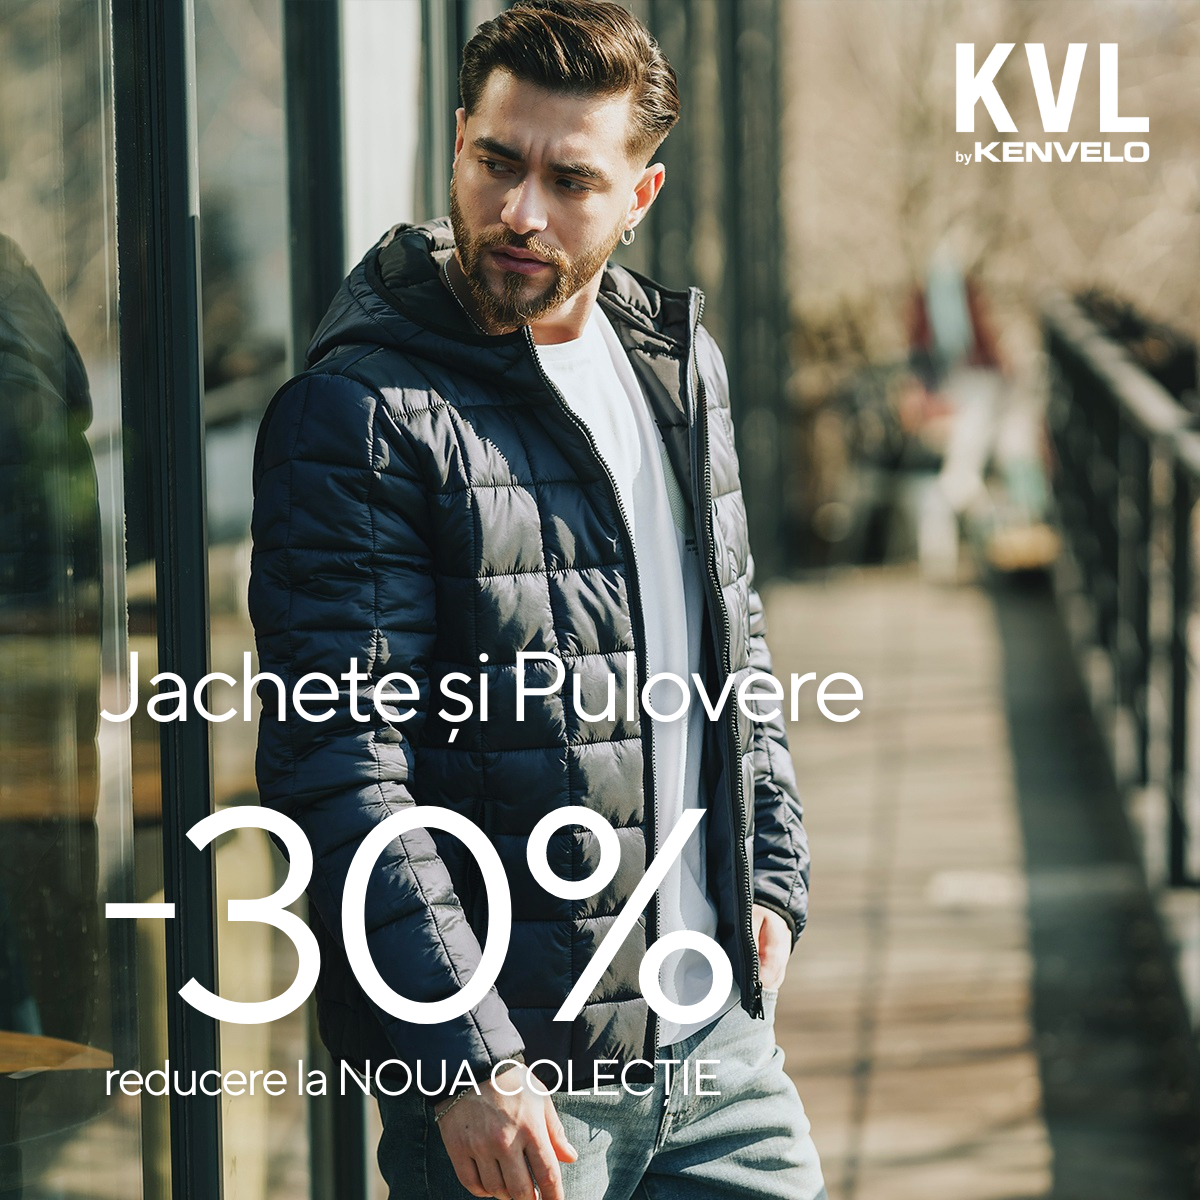 KVL: Jachete și Pulovere -30% la noua colecție